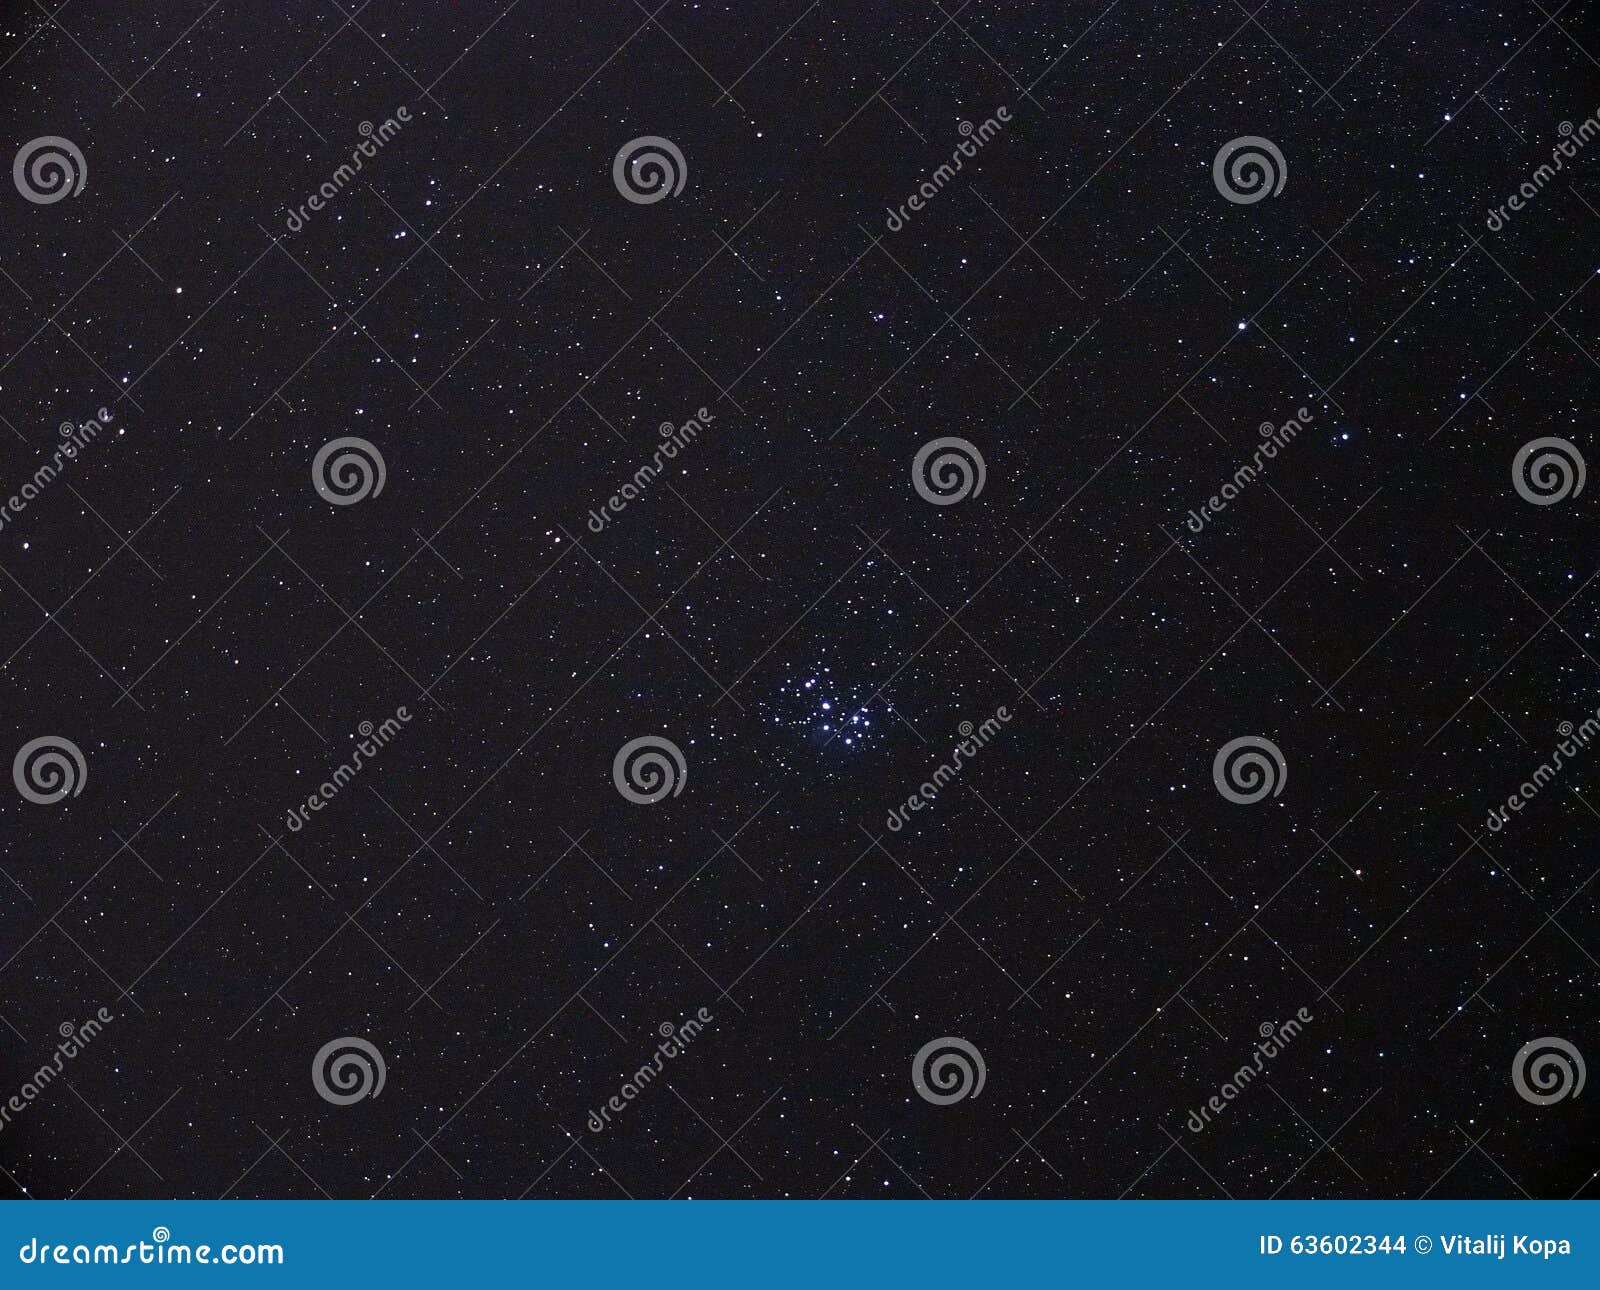 night sky stars and pleiades cluster m45